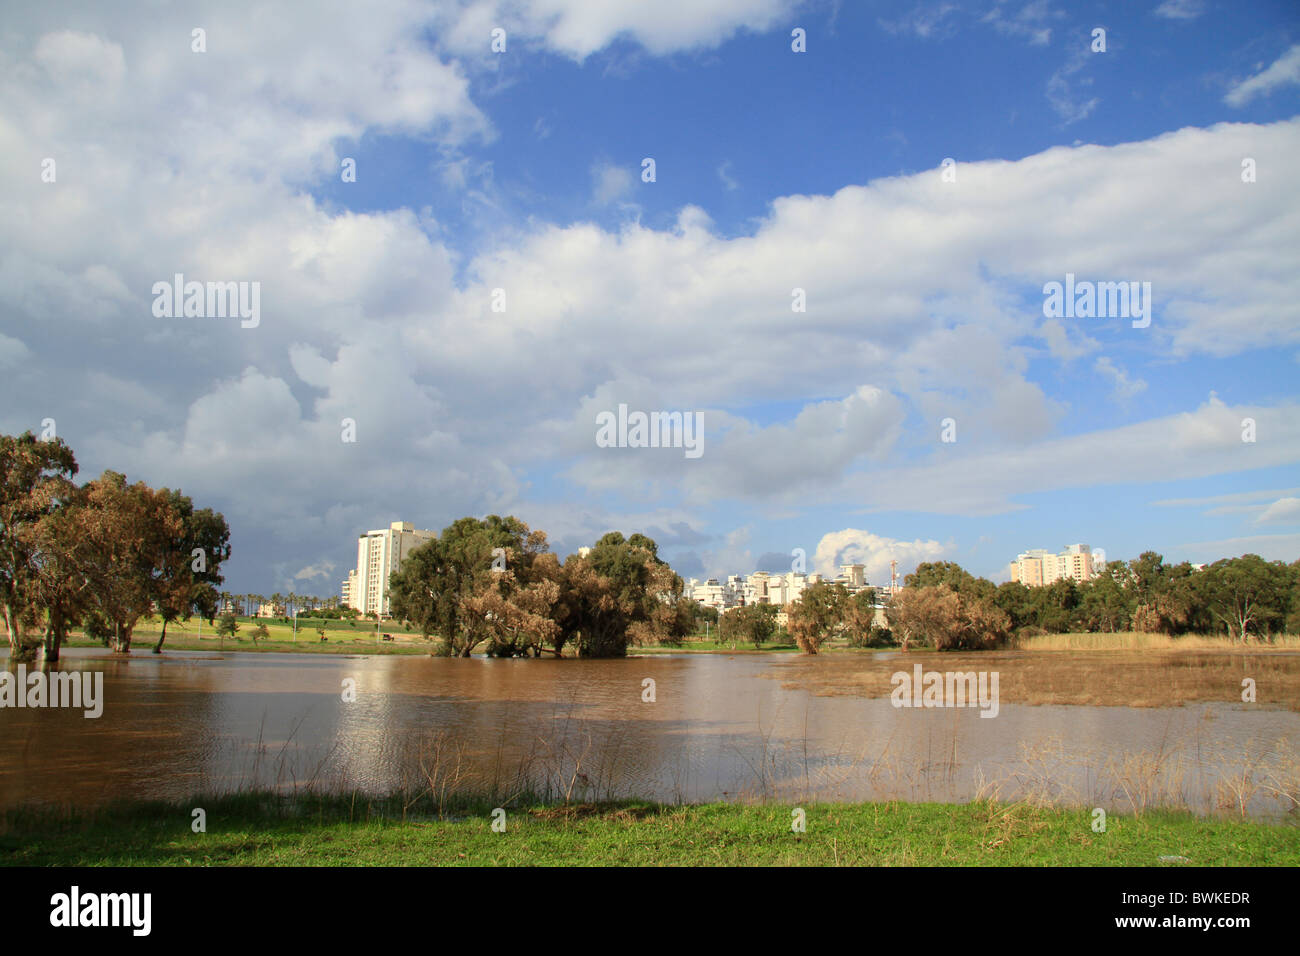 Israel, Sharon region, the rain pool in Netanya Stock Photo